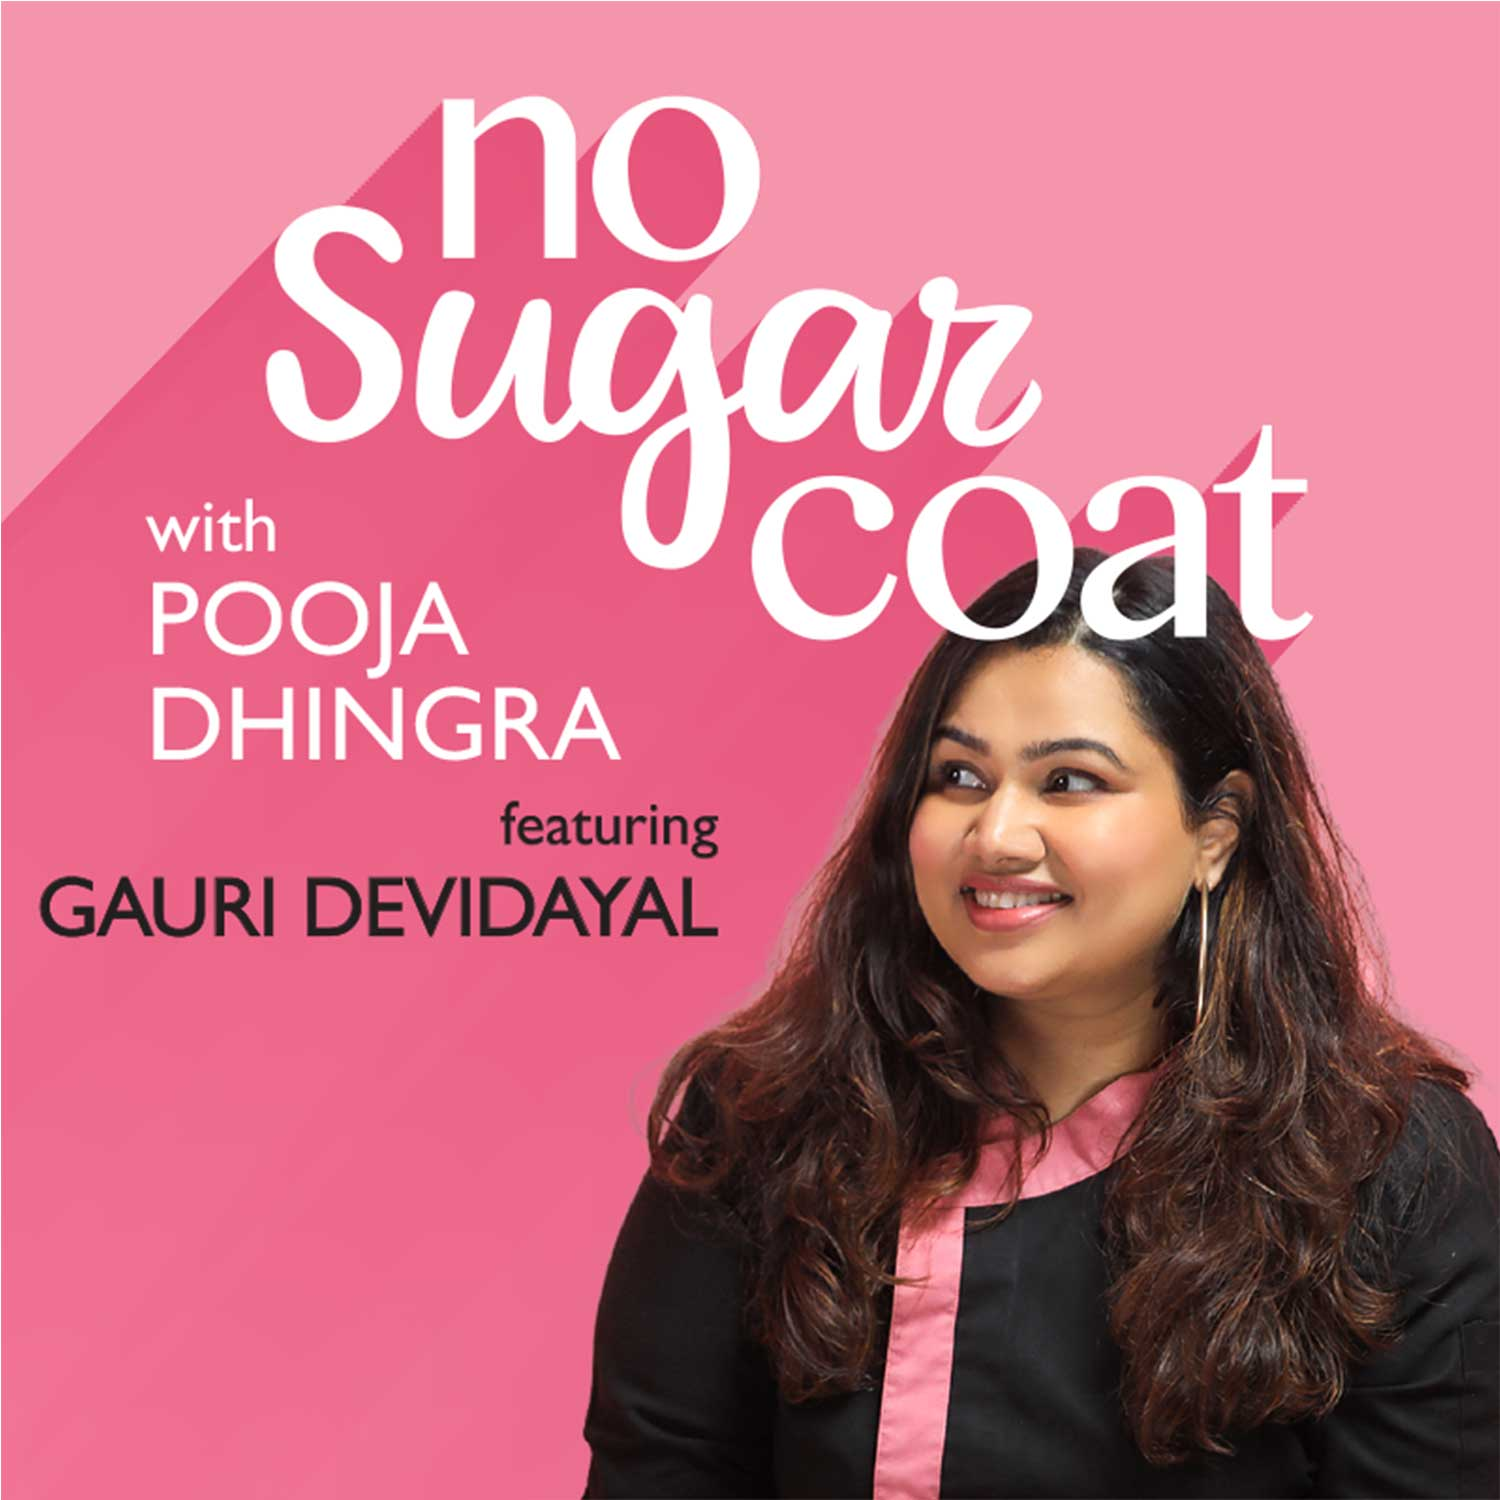 Gauri Devidayal